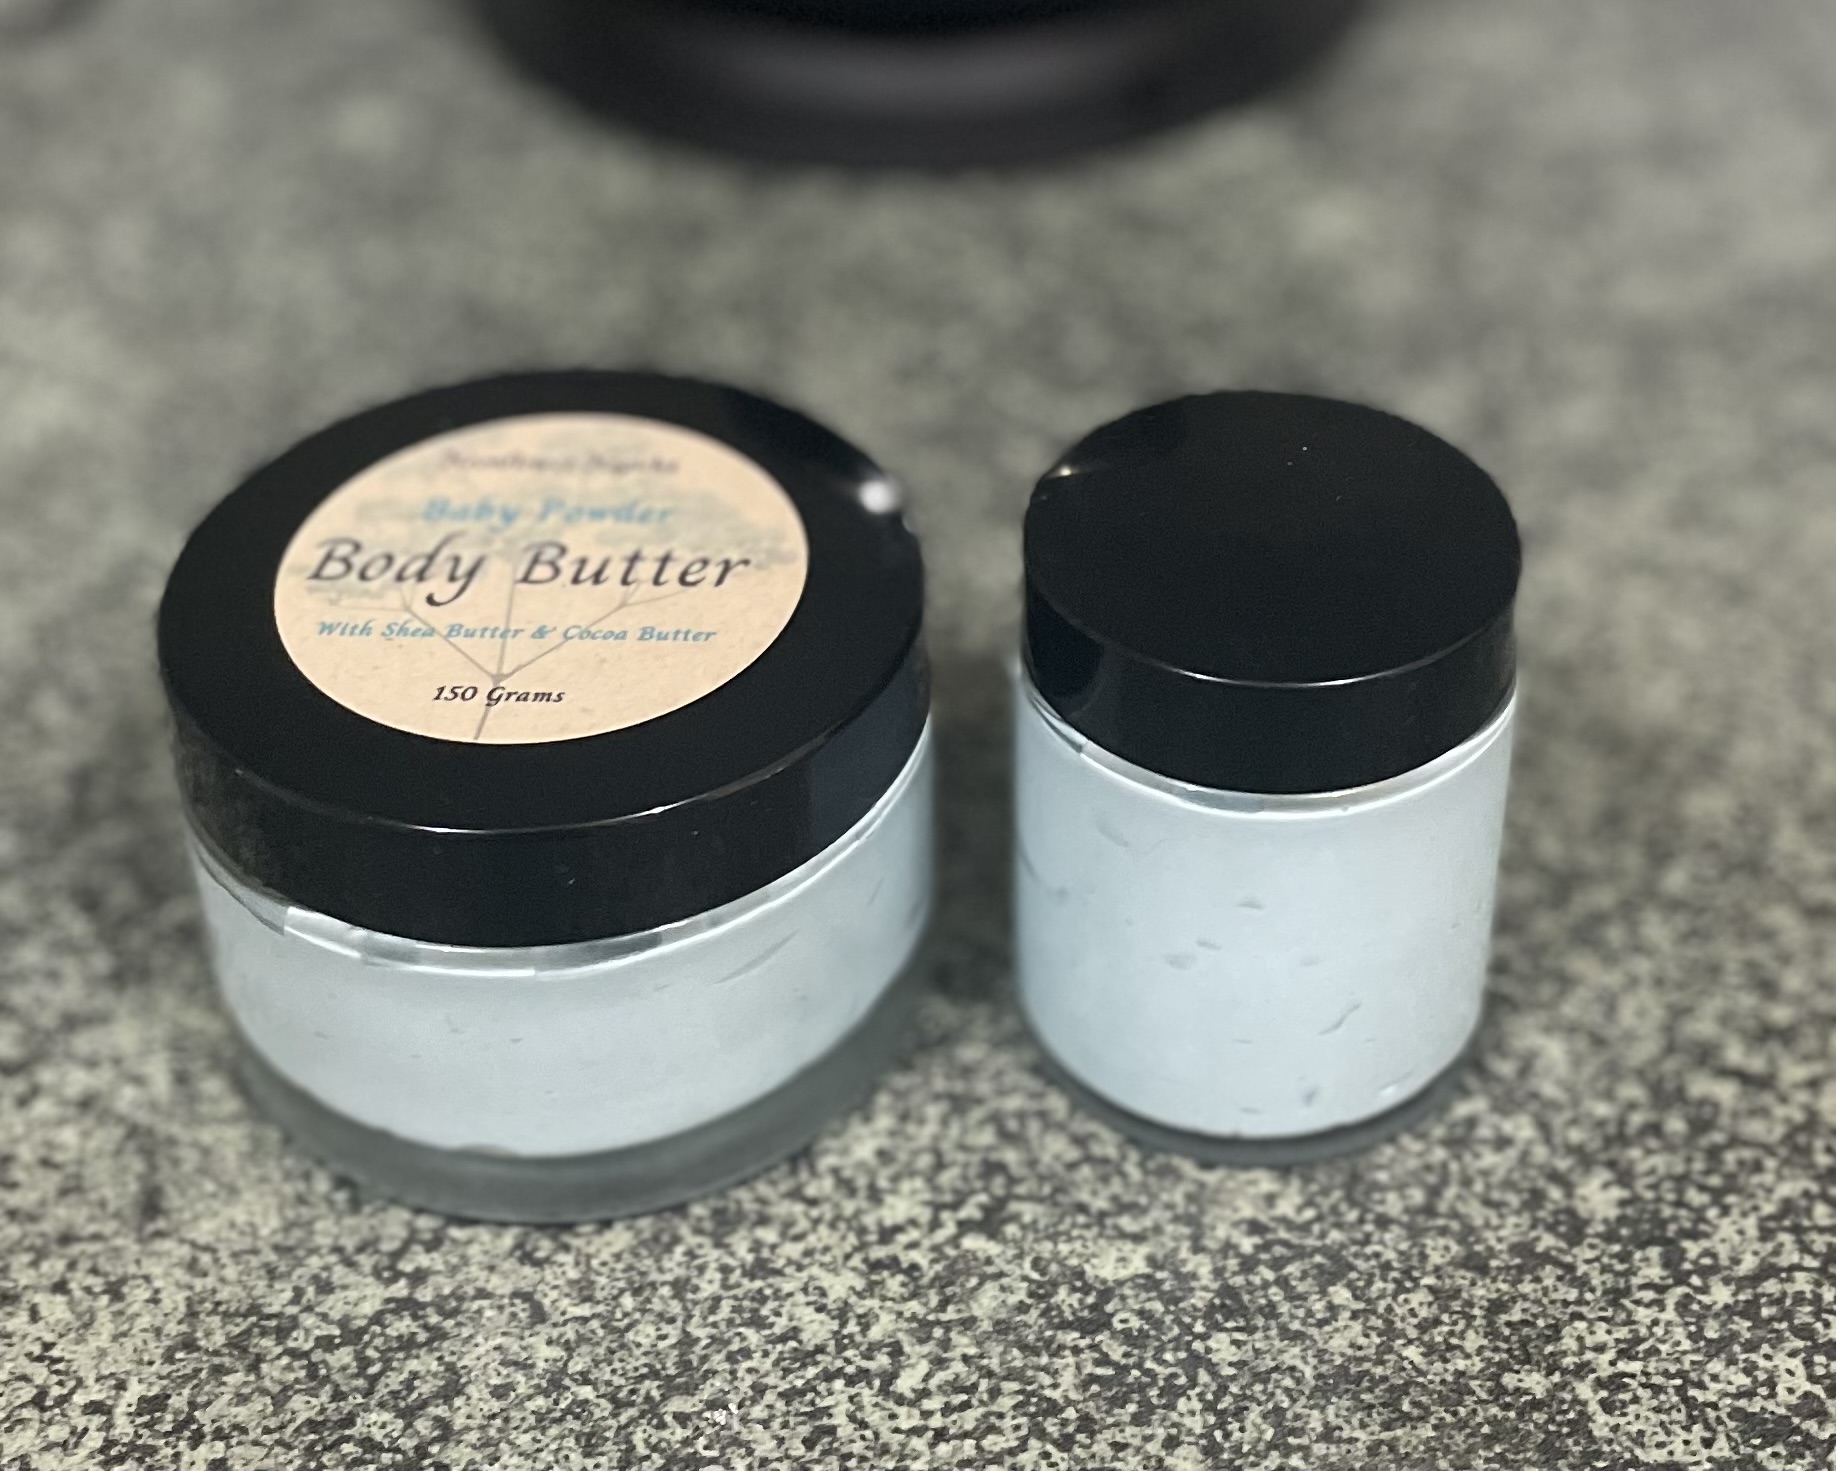 Baby Powder Fragrance Oil – Wellington Fragrance